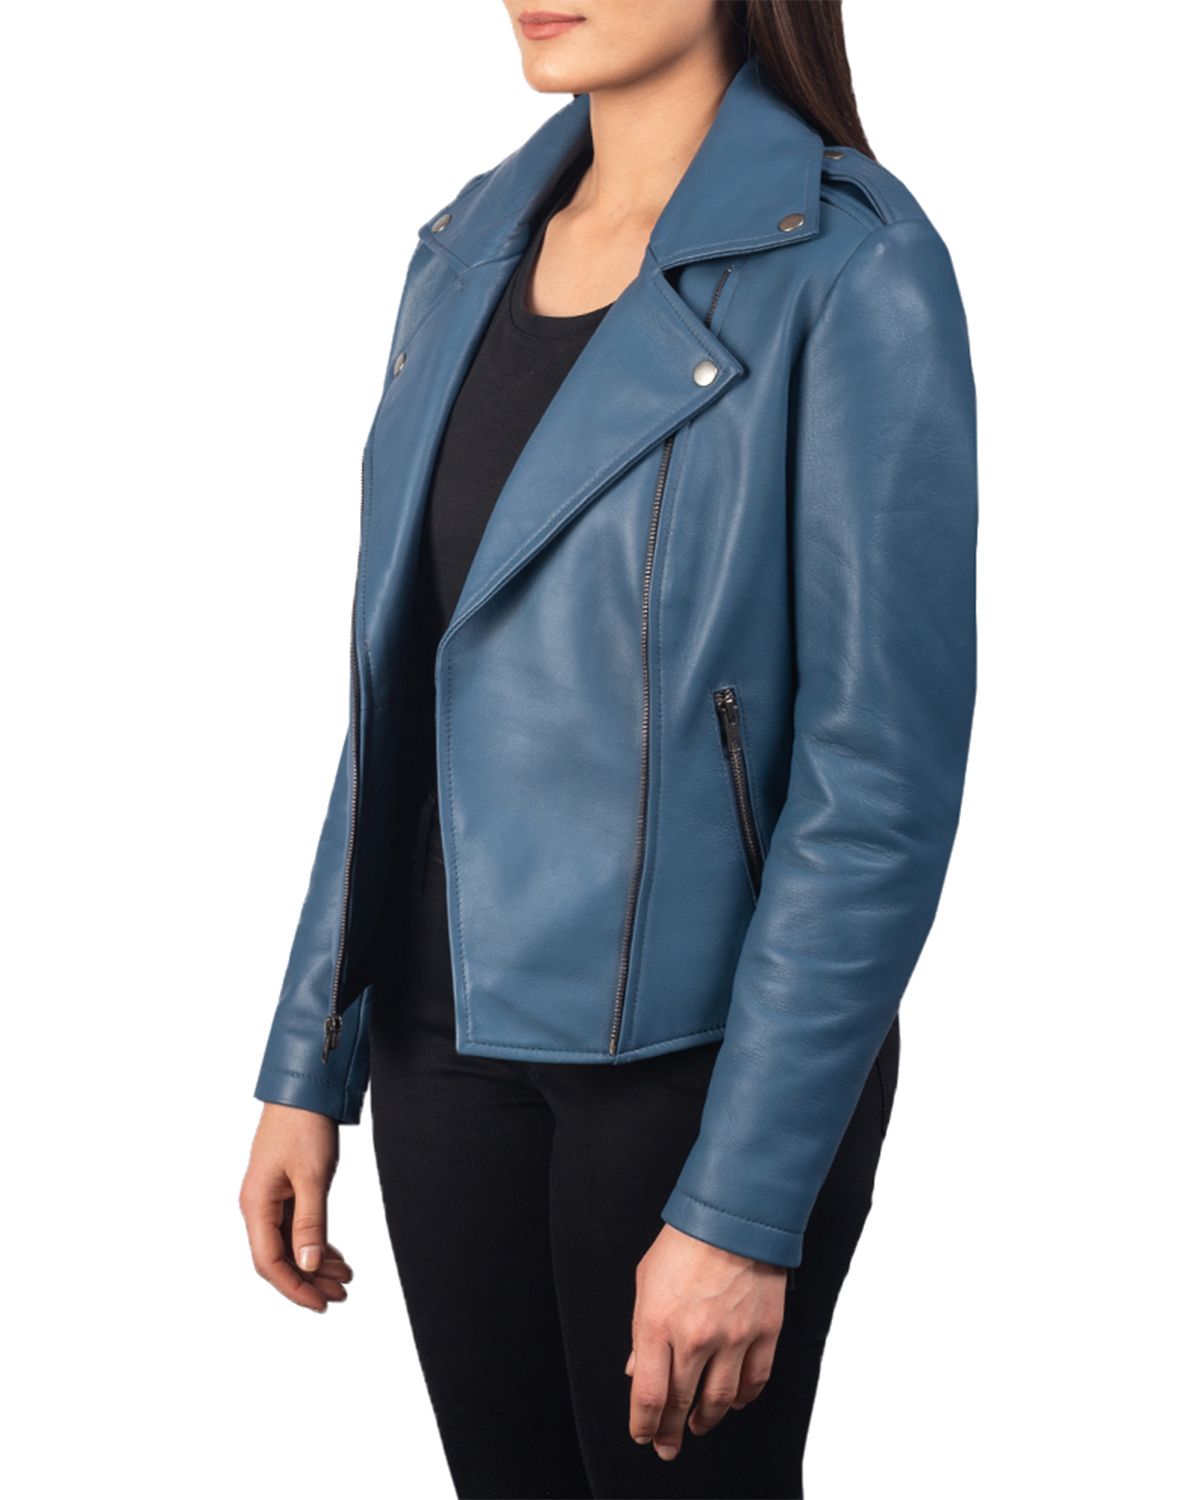 Notch Collar Stylish Biker Leather Jacket For Women | Elite Jacket